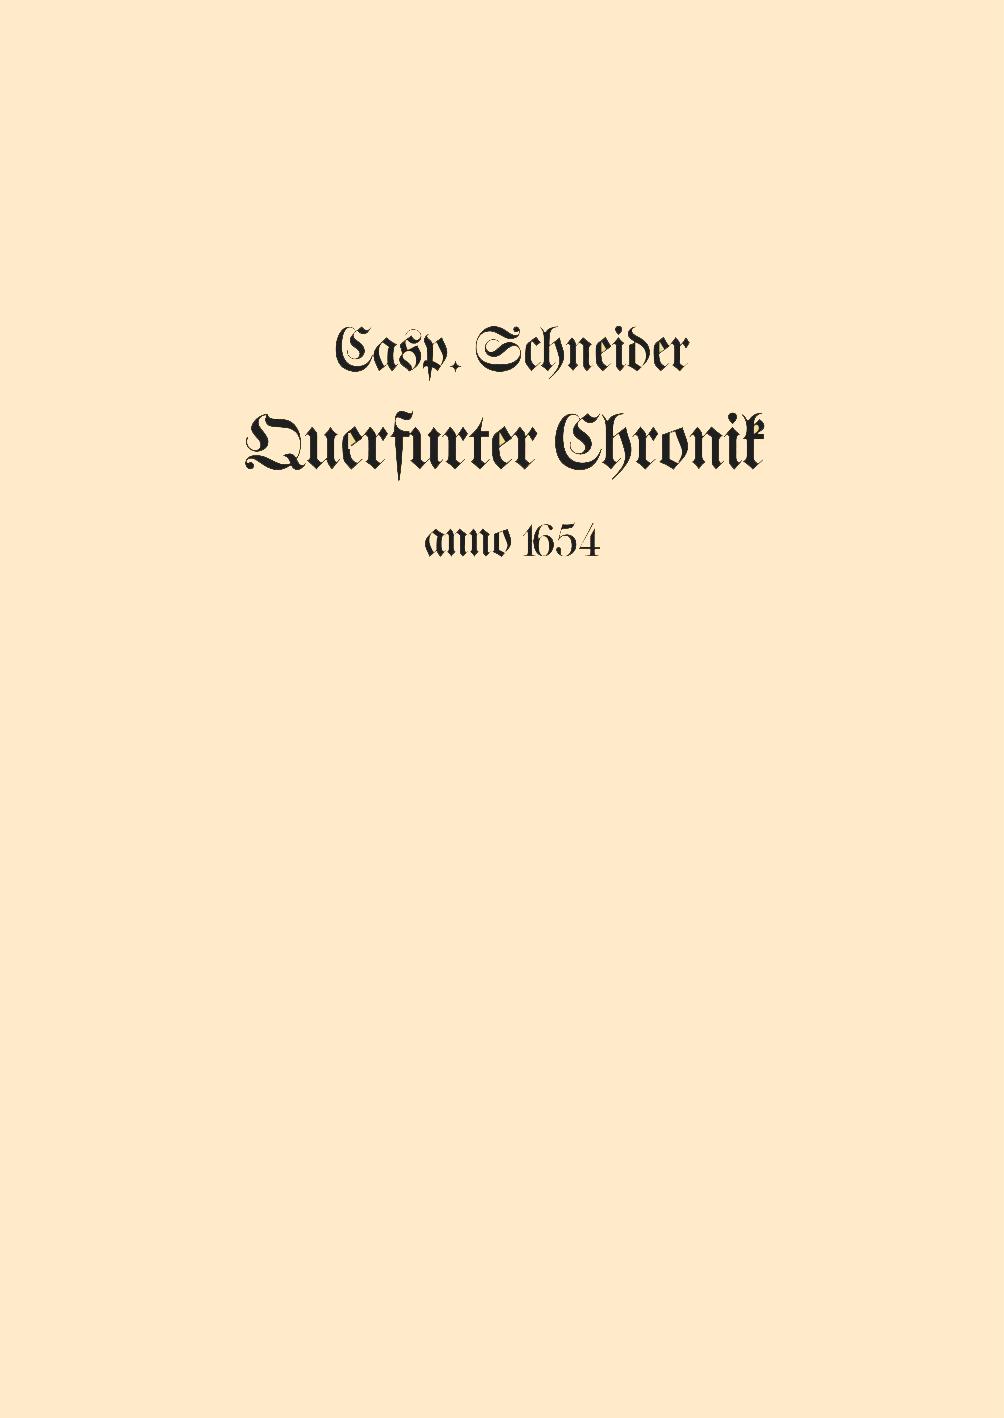 Querfurter Chronik anno 1654